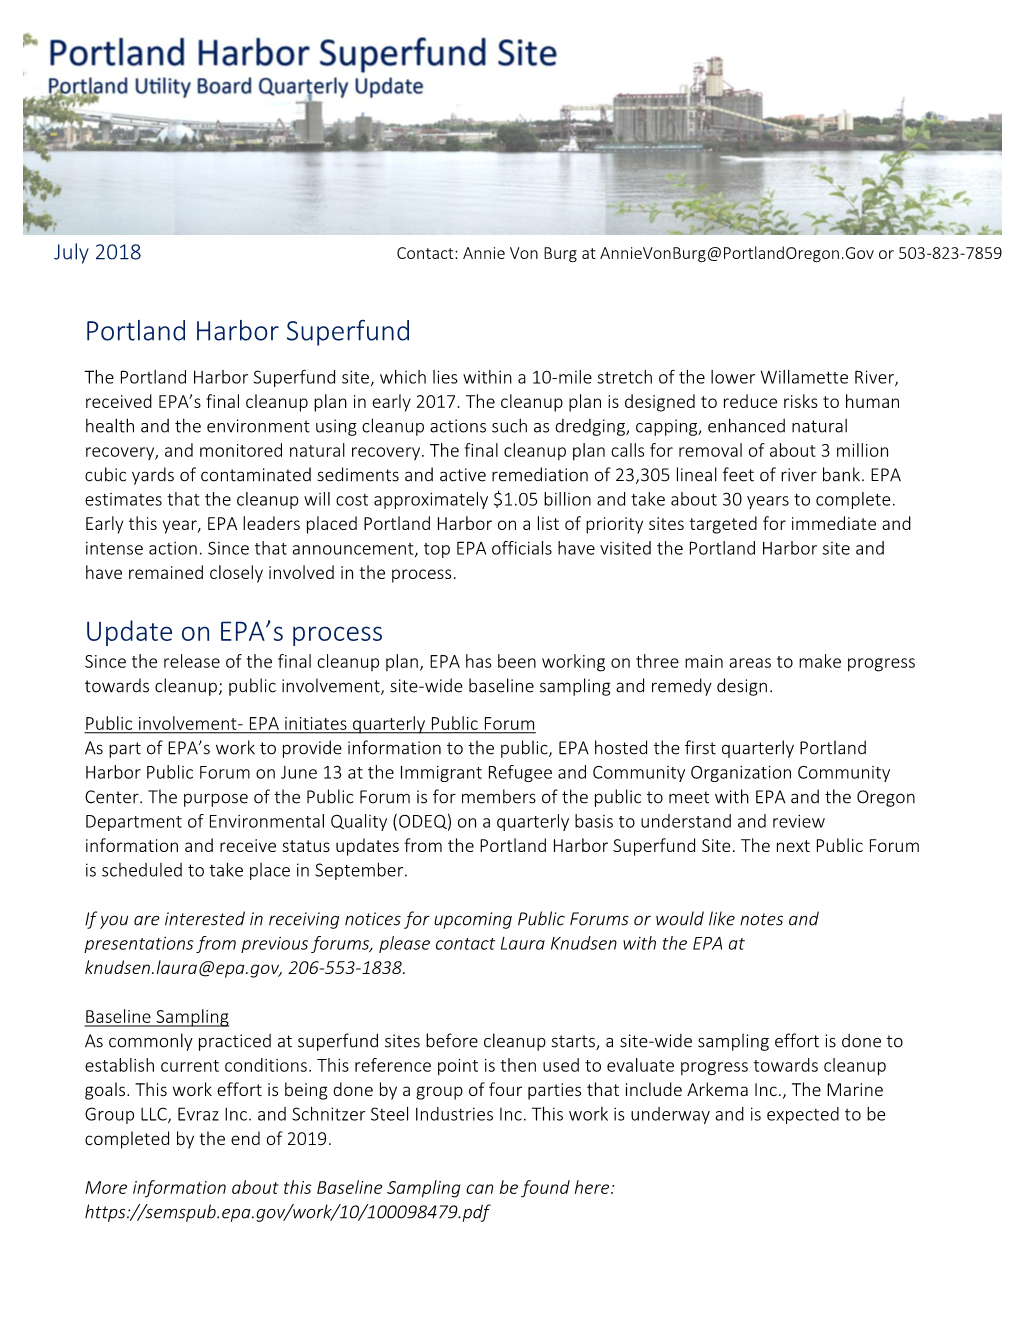 Portland Harbor Superfund Update on EPA's Process